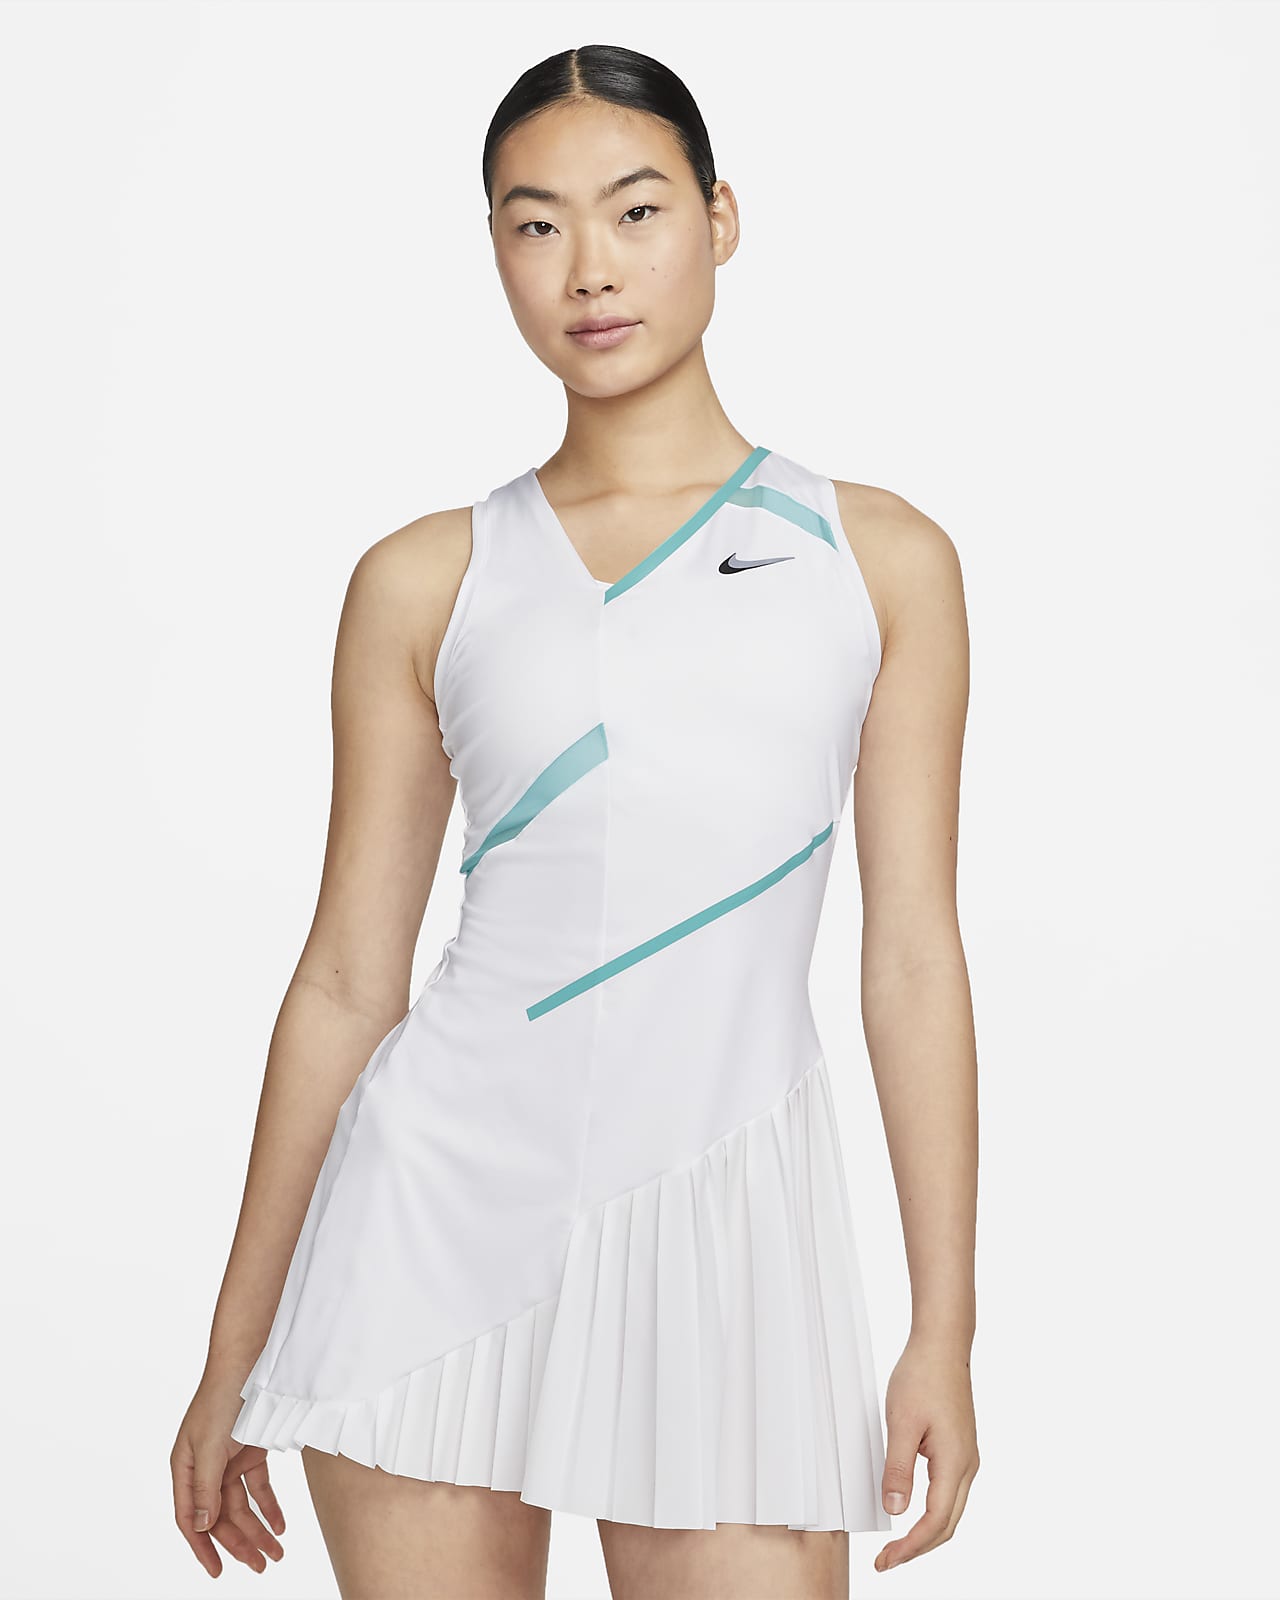 NikeCourt Dri-FIT Women's Tennis Dress